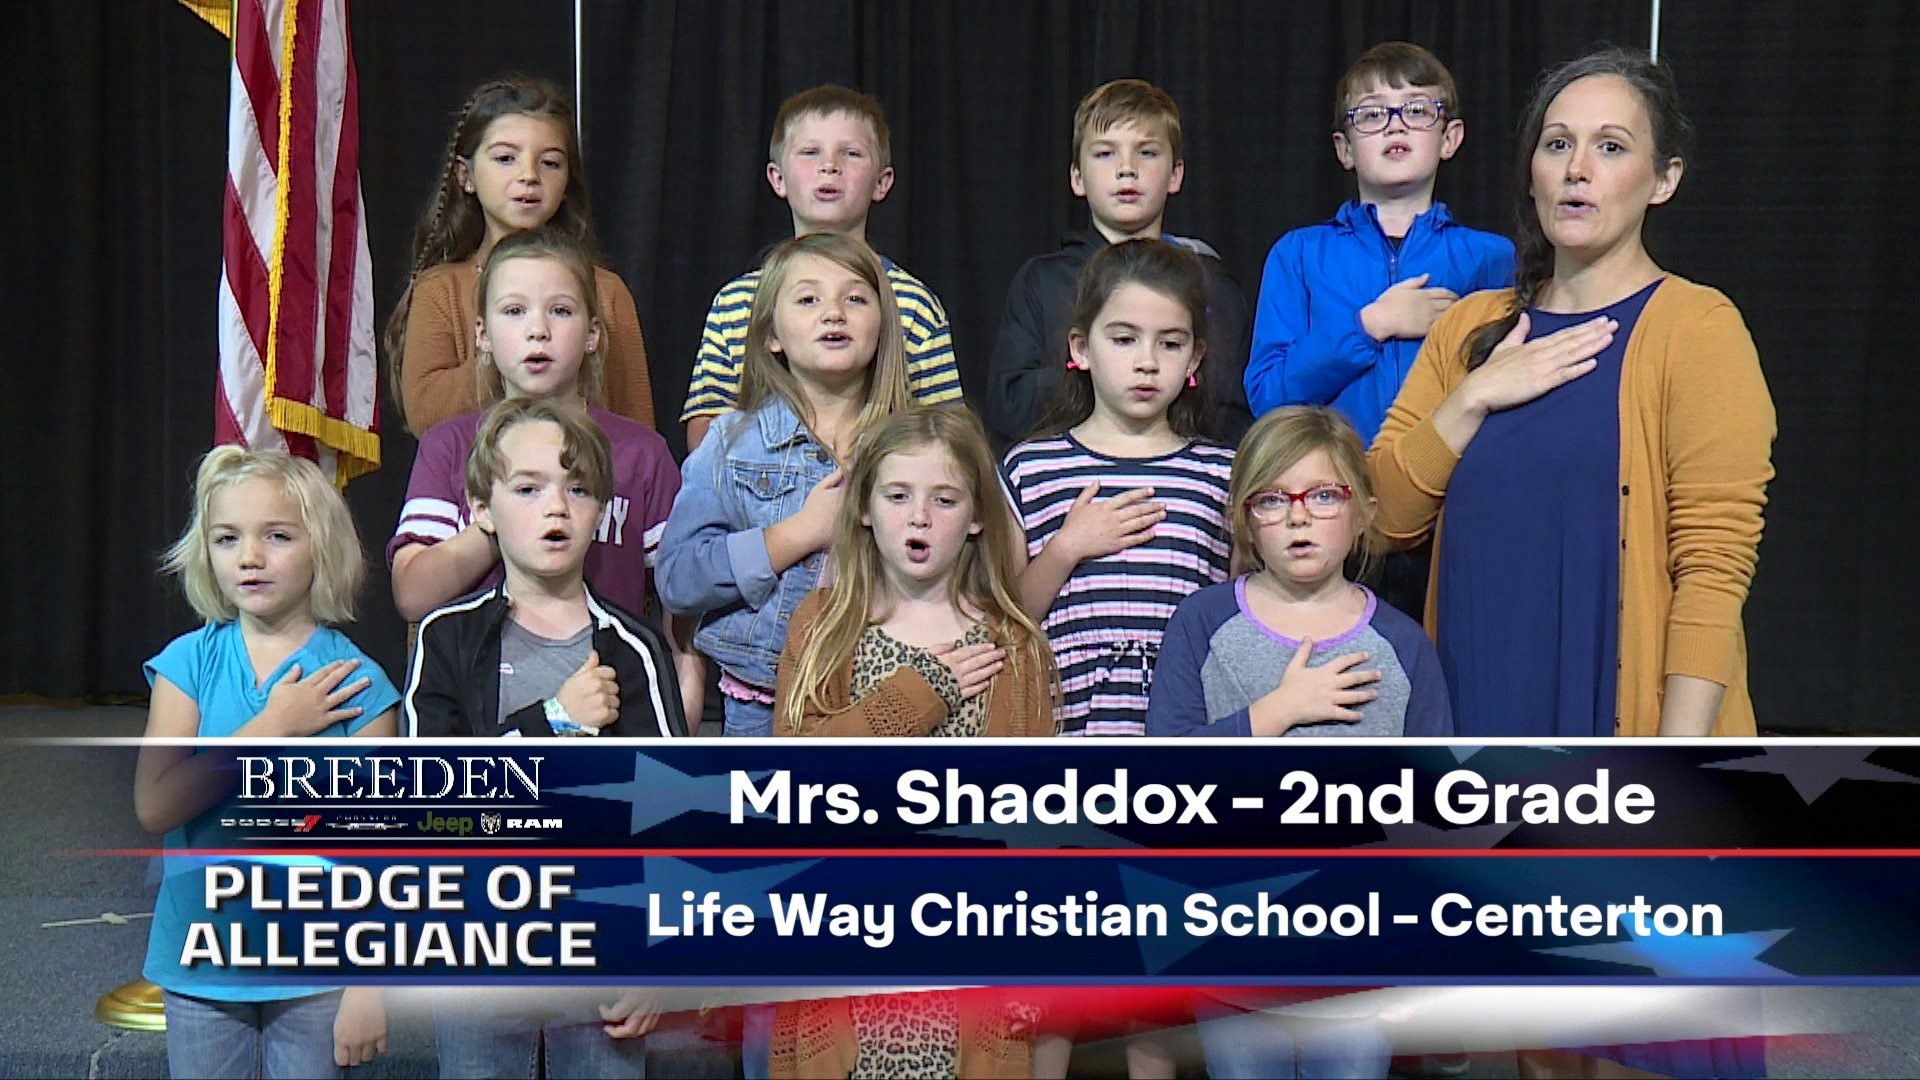 Mrs. Shaddox 2nd Grade Life Way Christian School, Centerton